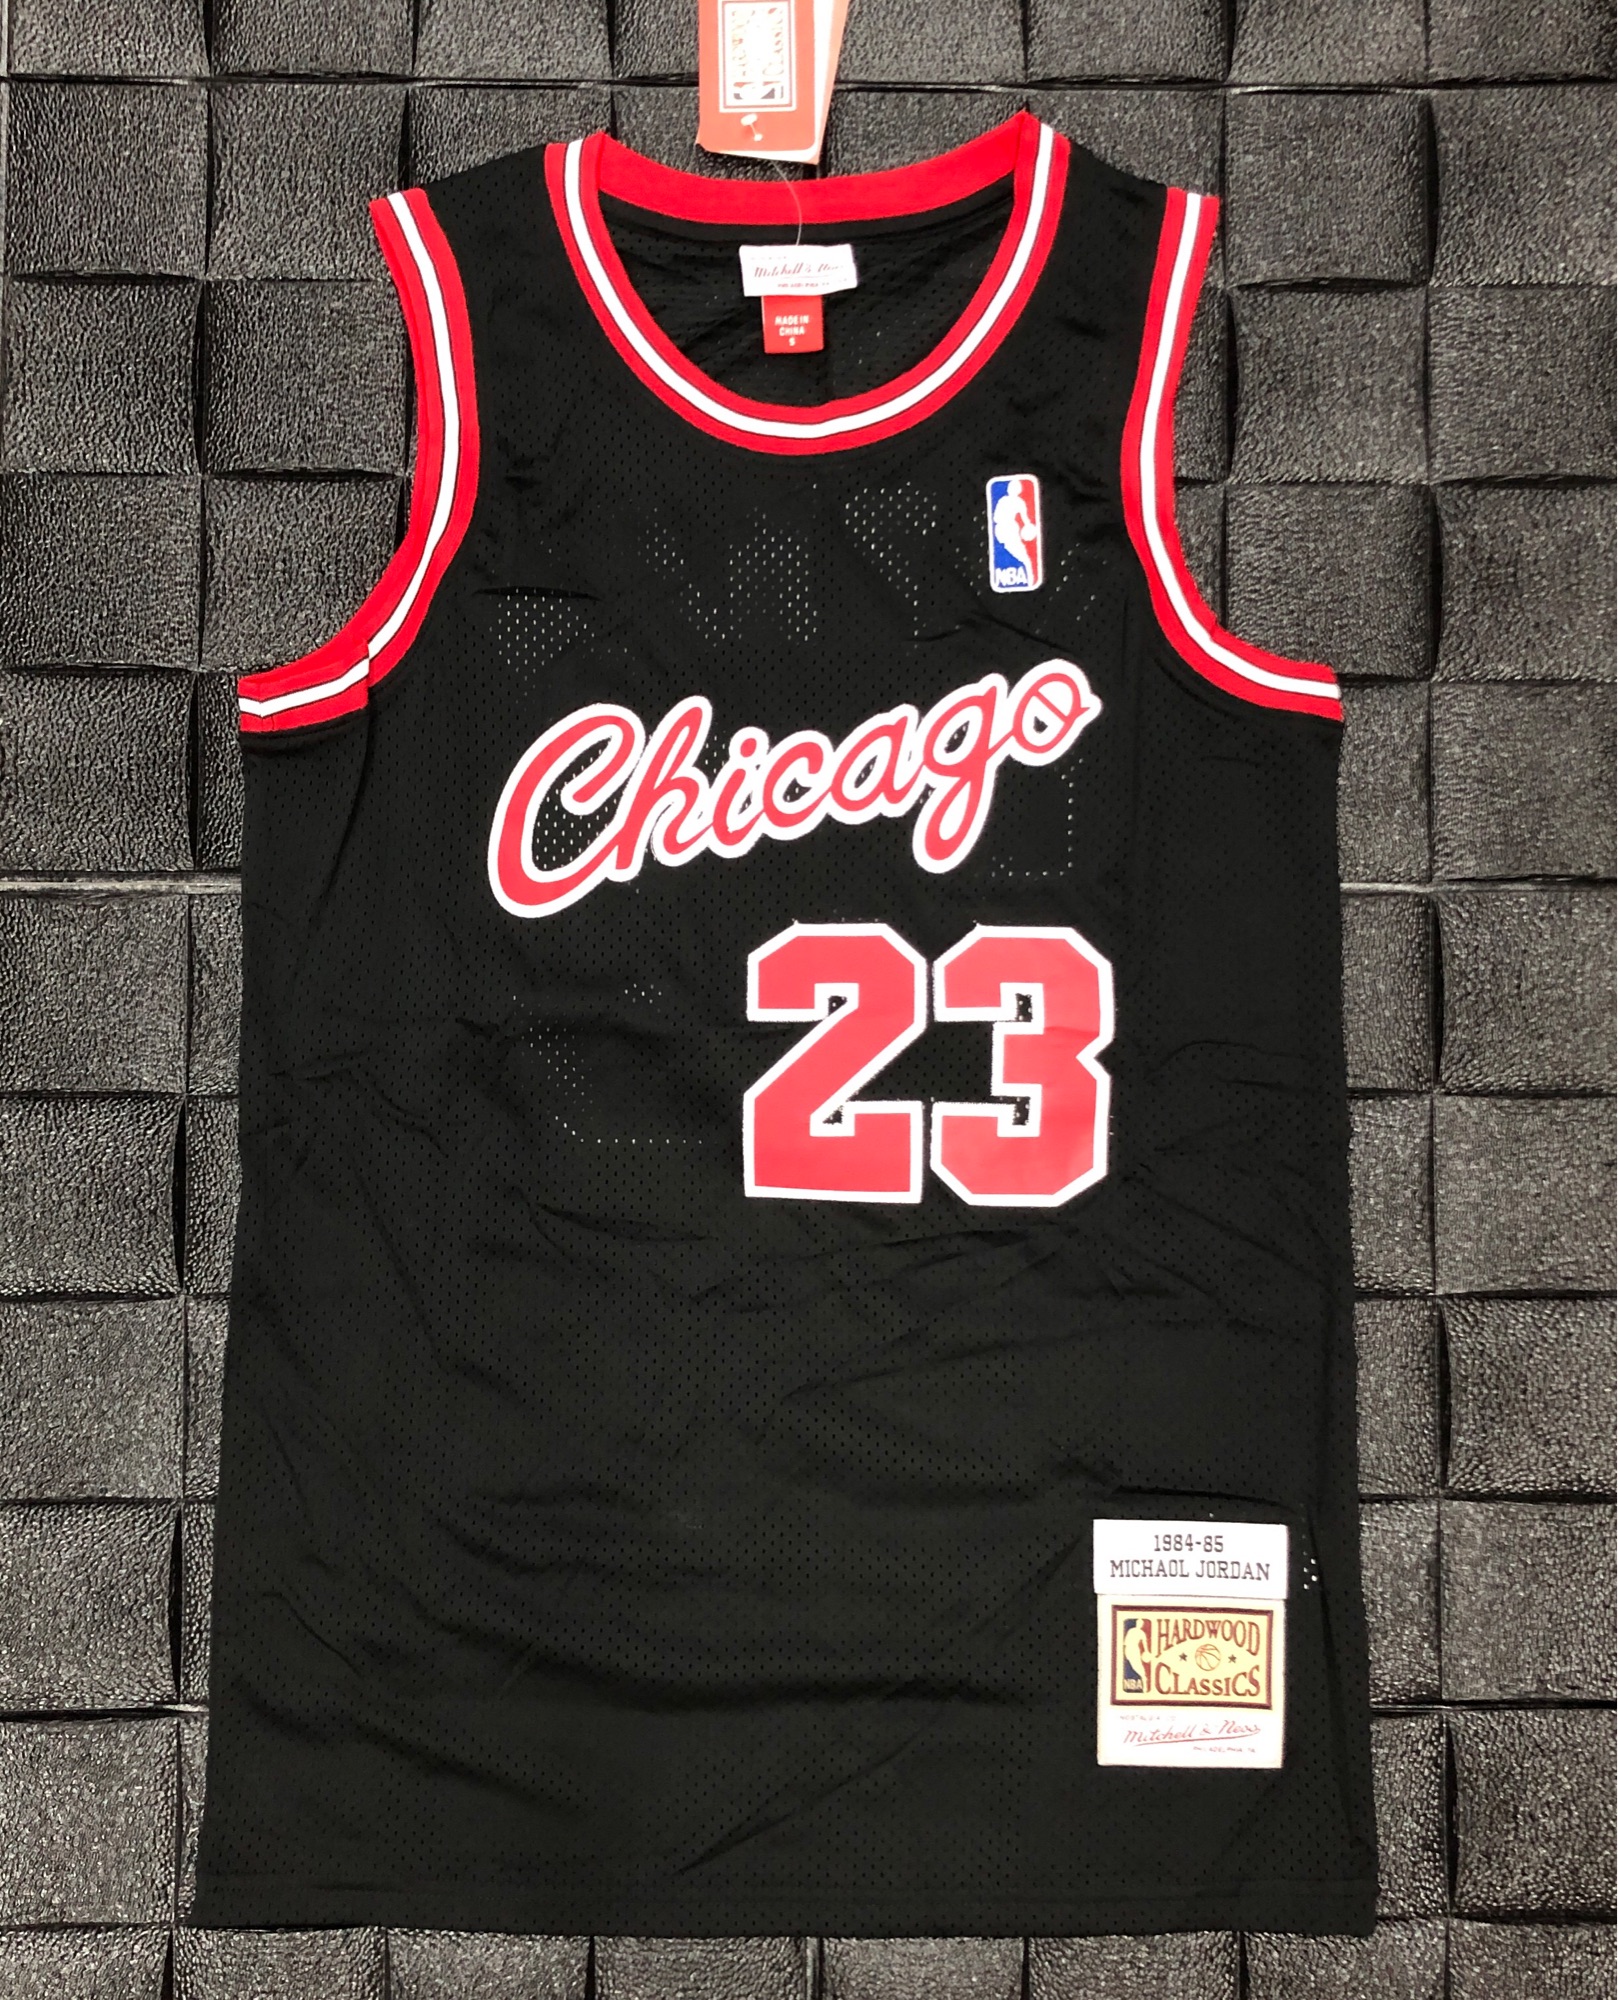 Chicago Bulls 23 MJ High Quality Nba Basketball Sando Jersey for men